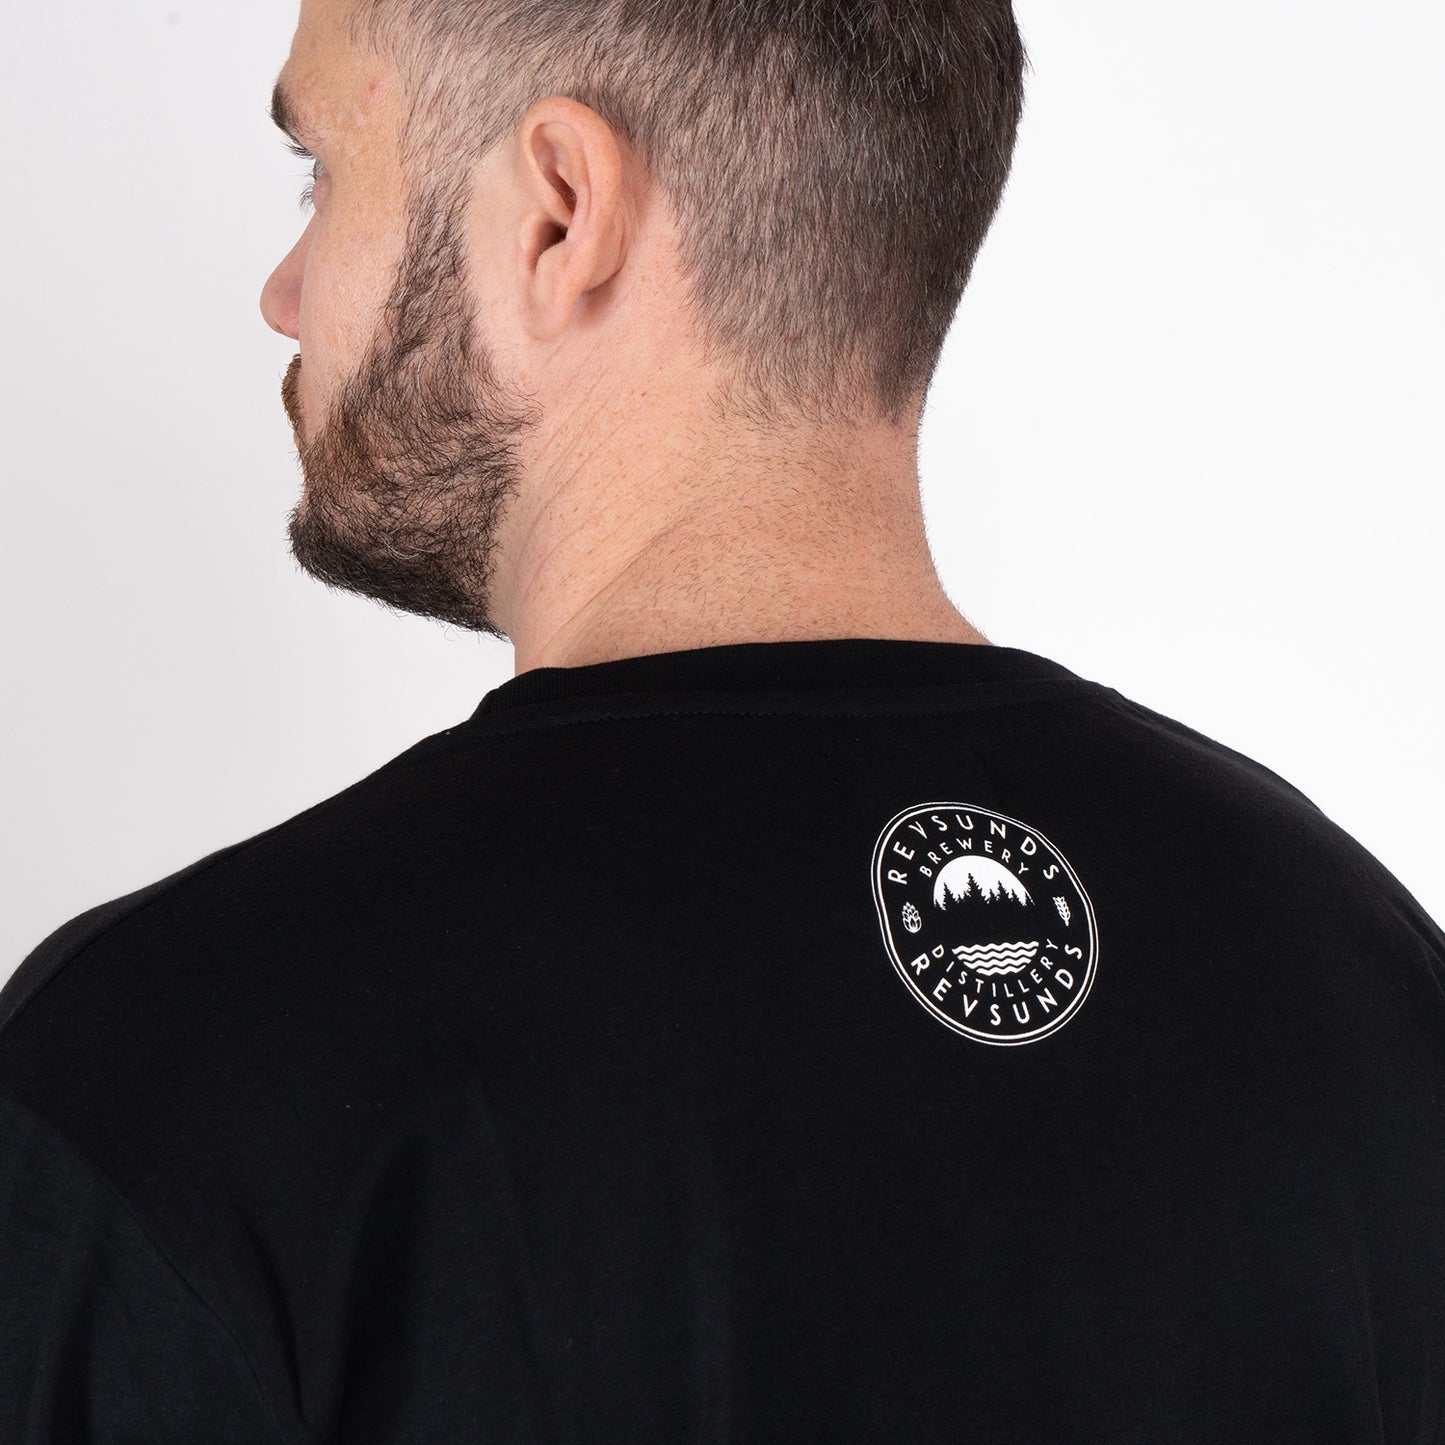 Sqrtn - The Great Revsund T-shirt - Black